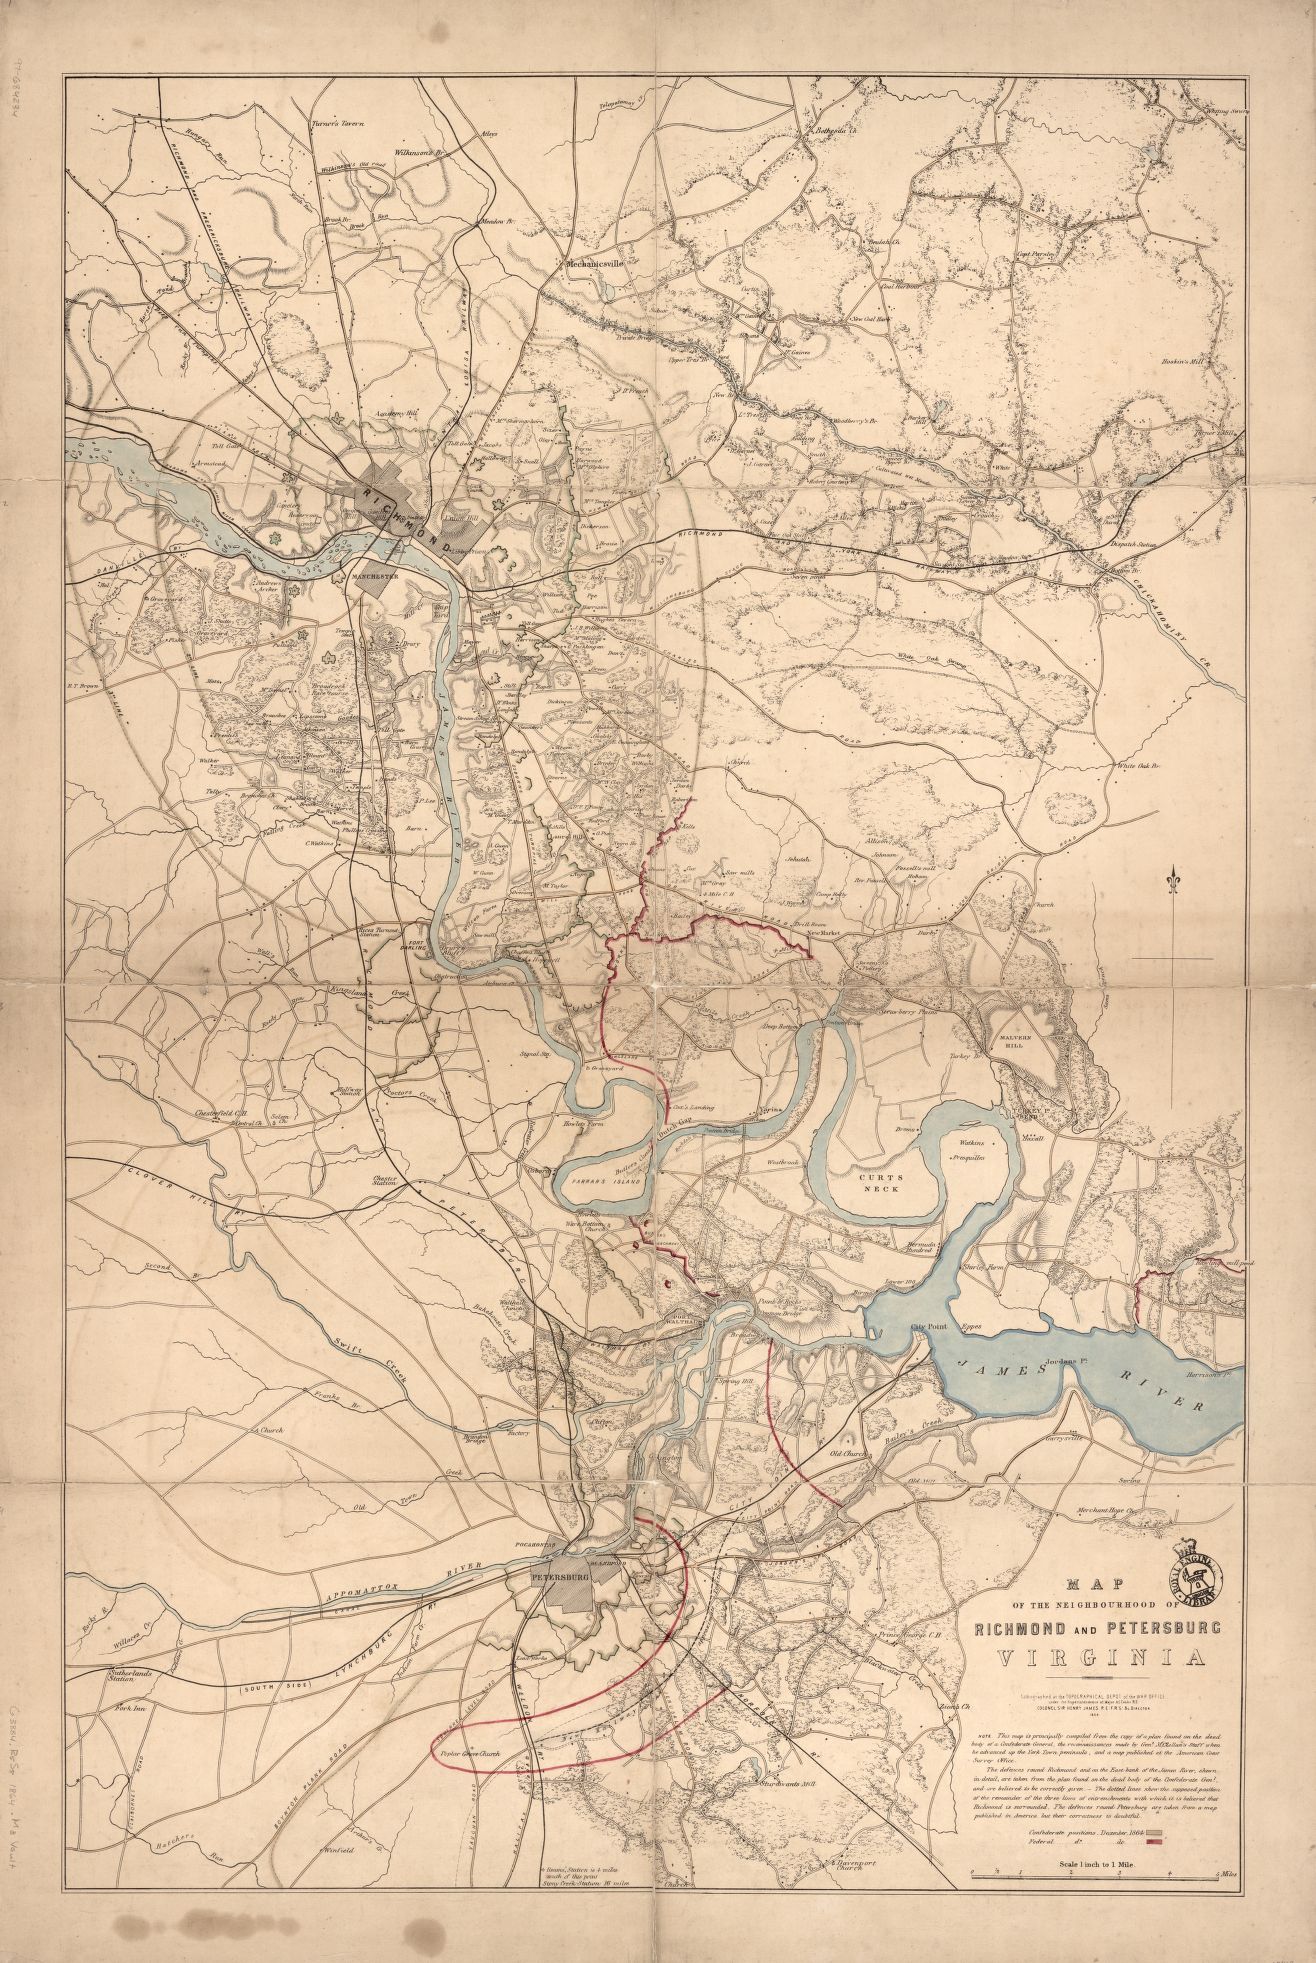 Map of the neighbourhood of Richmond and Petersburg, Virginia